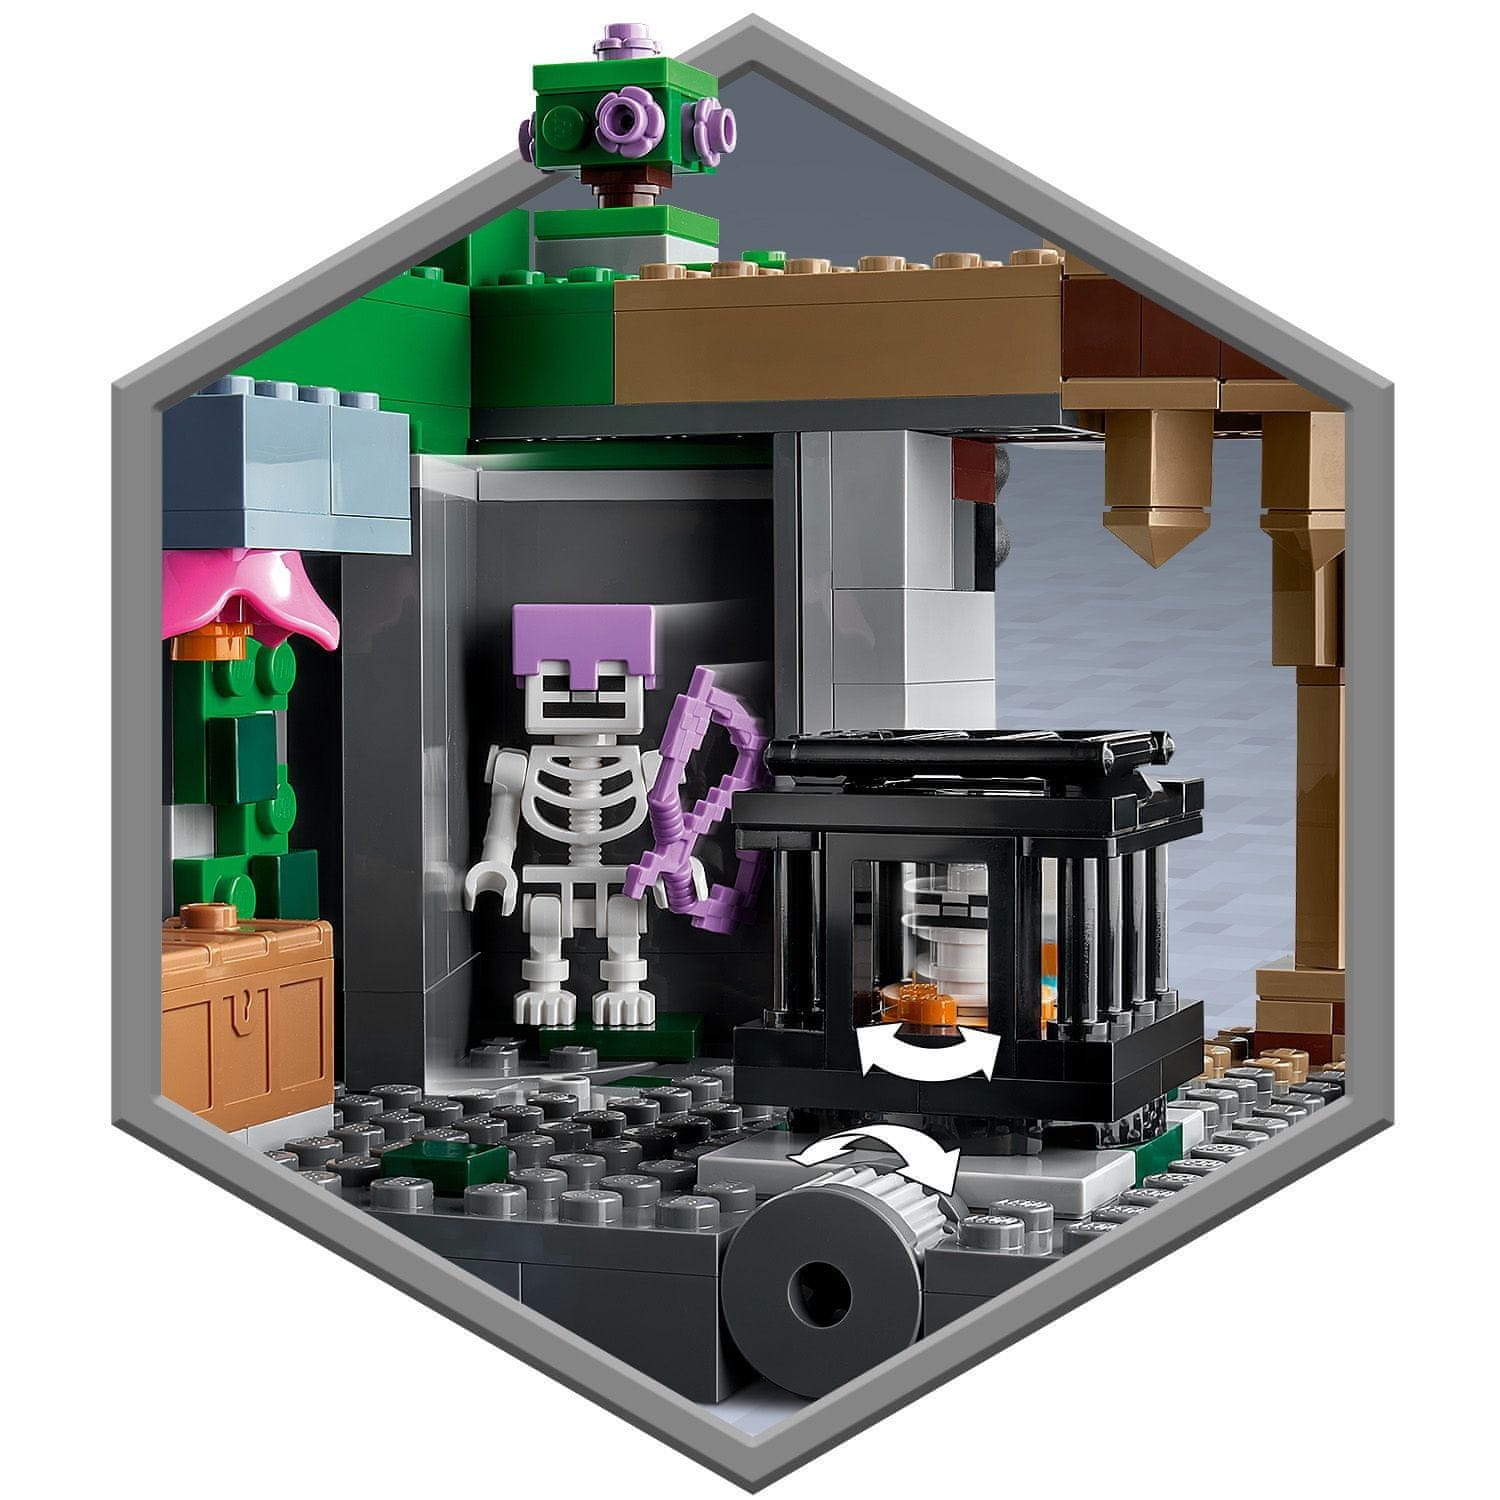 Lego Minecraft 21189 Jaskyňa kostlivcov